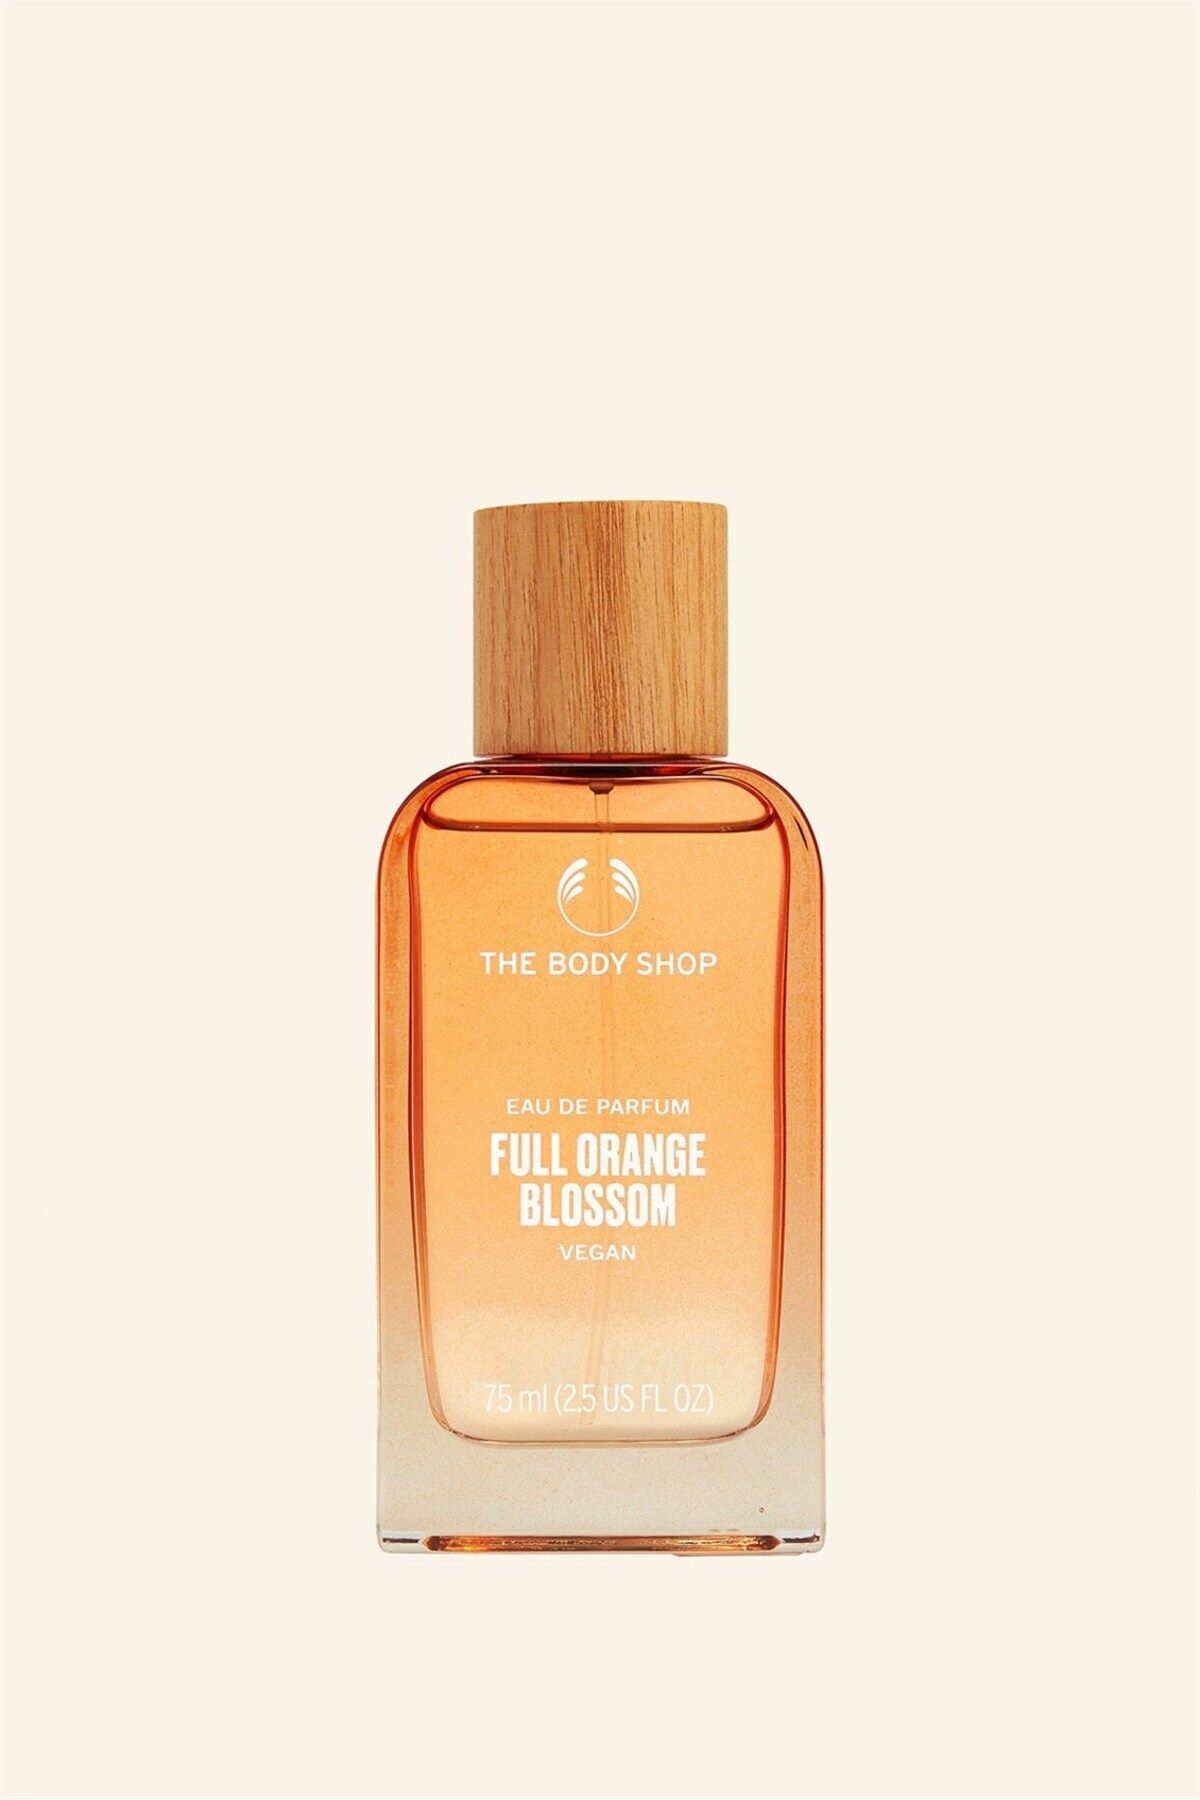 THE BODY SHOP Full Orange Blossom Eau De Parfum 75 ml